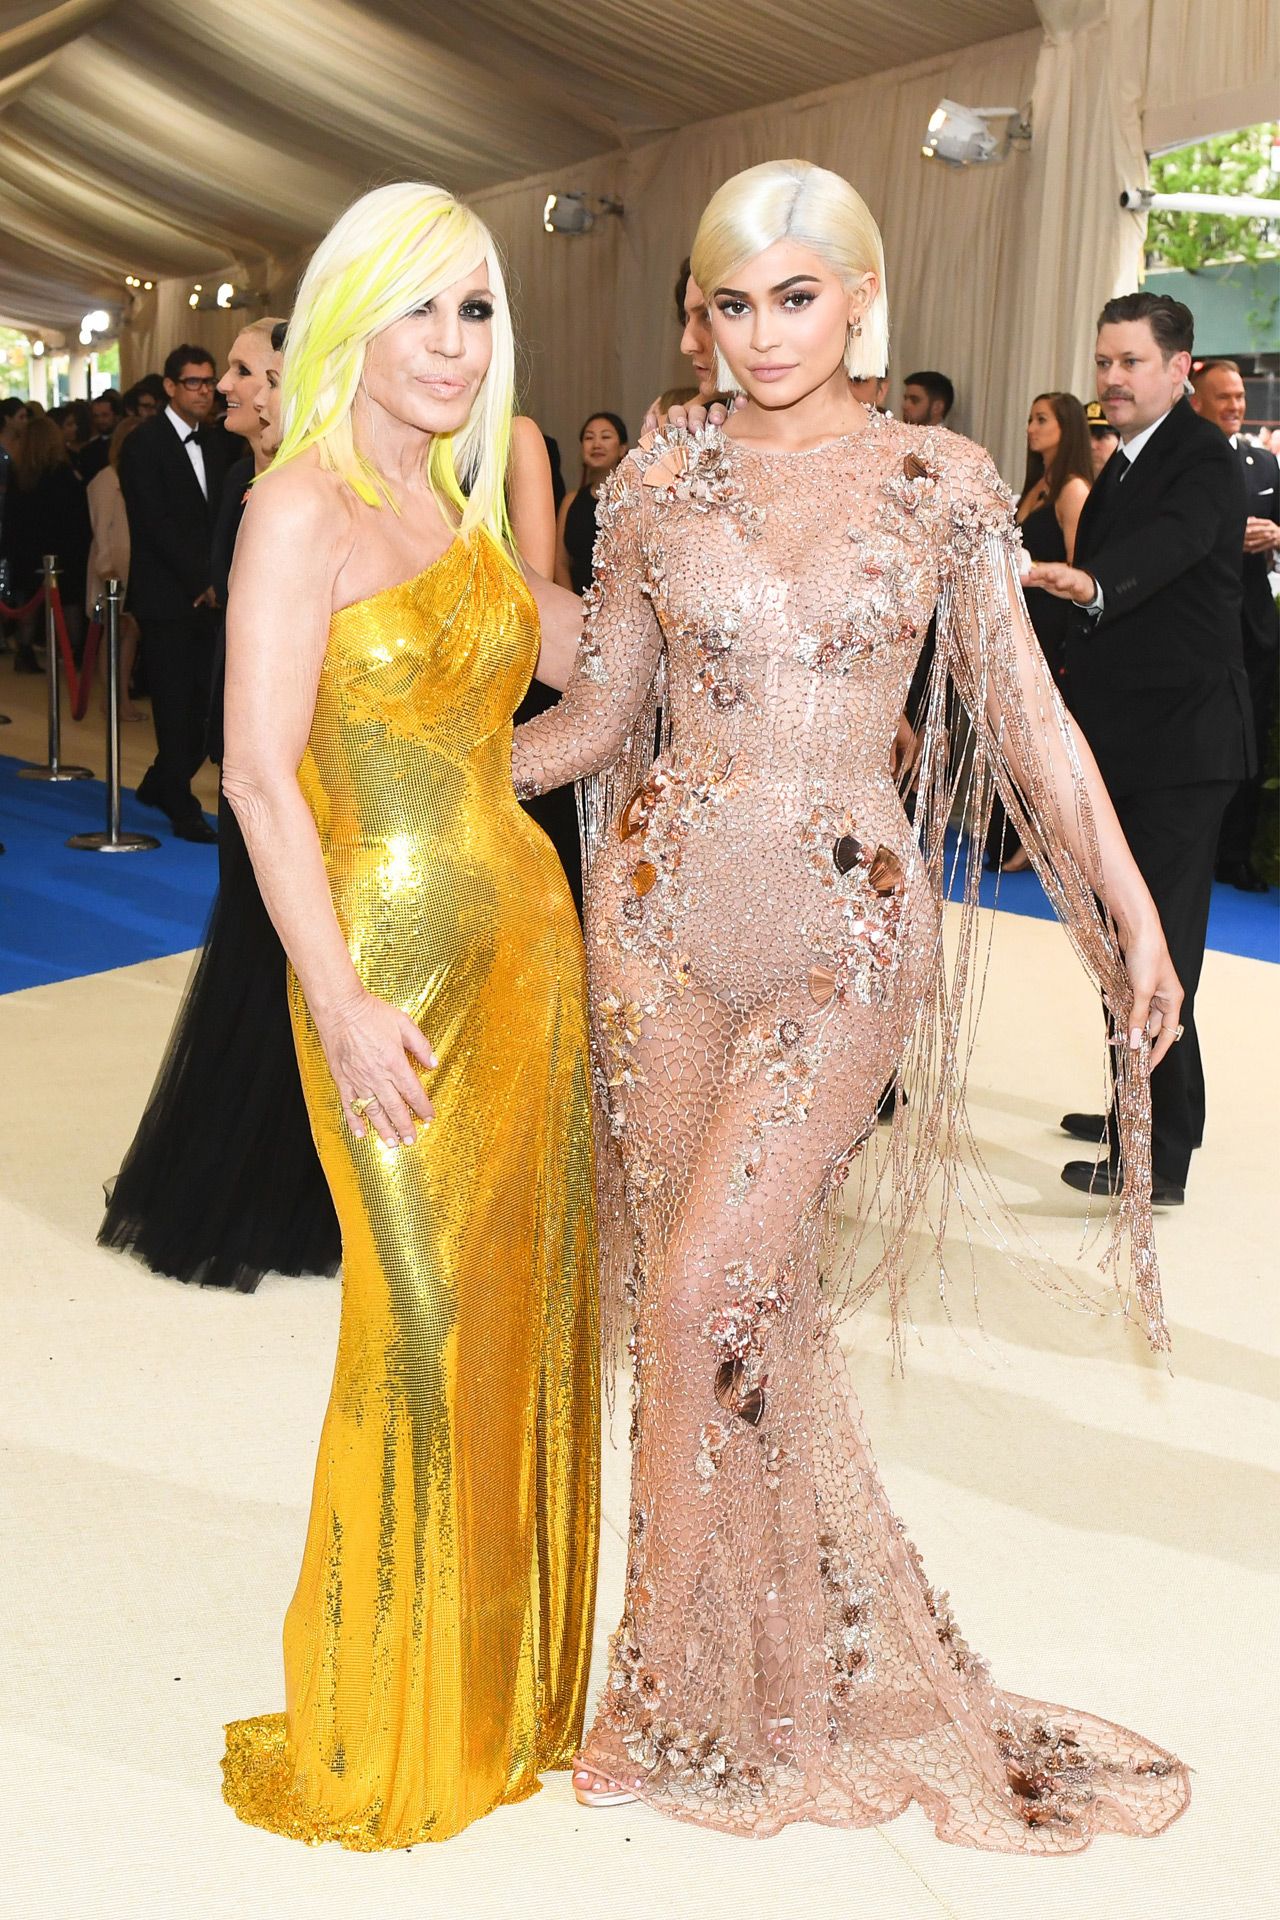 Kylie Jenner, Donatella Versace, Vogue, Met Gala 2018, The Met Gala 2018, The Met Gala, Met Gala, Metropolitan Museum of Art